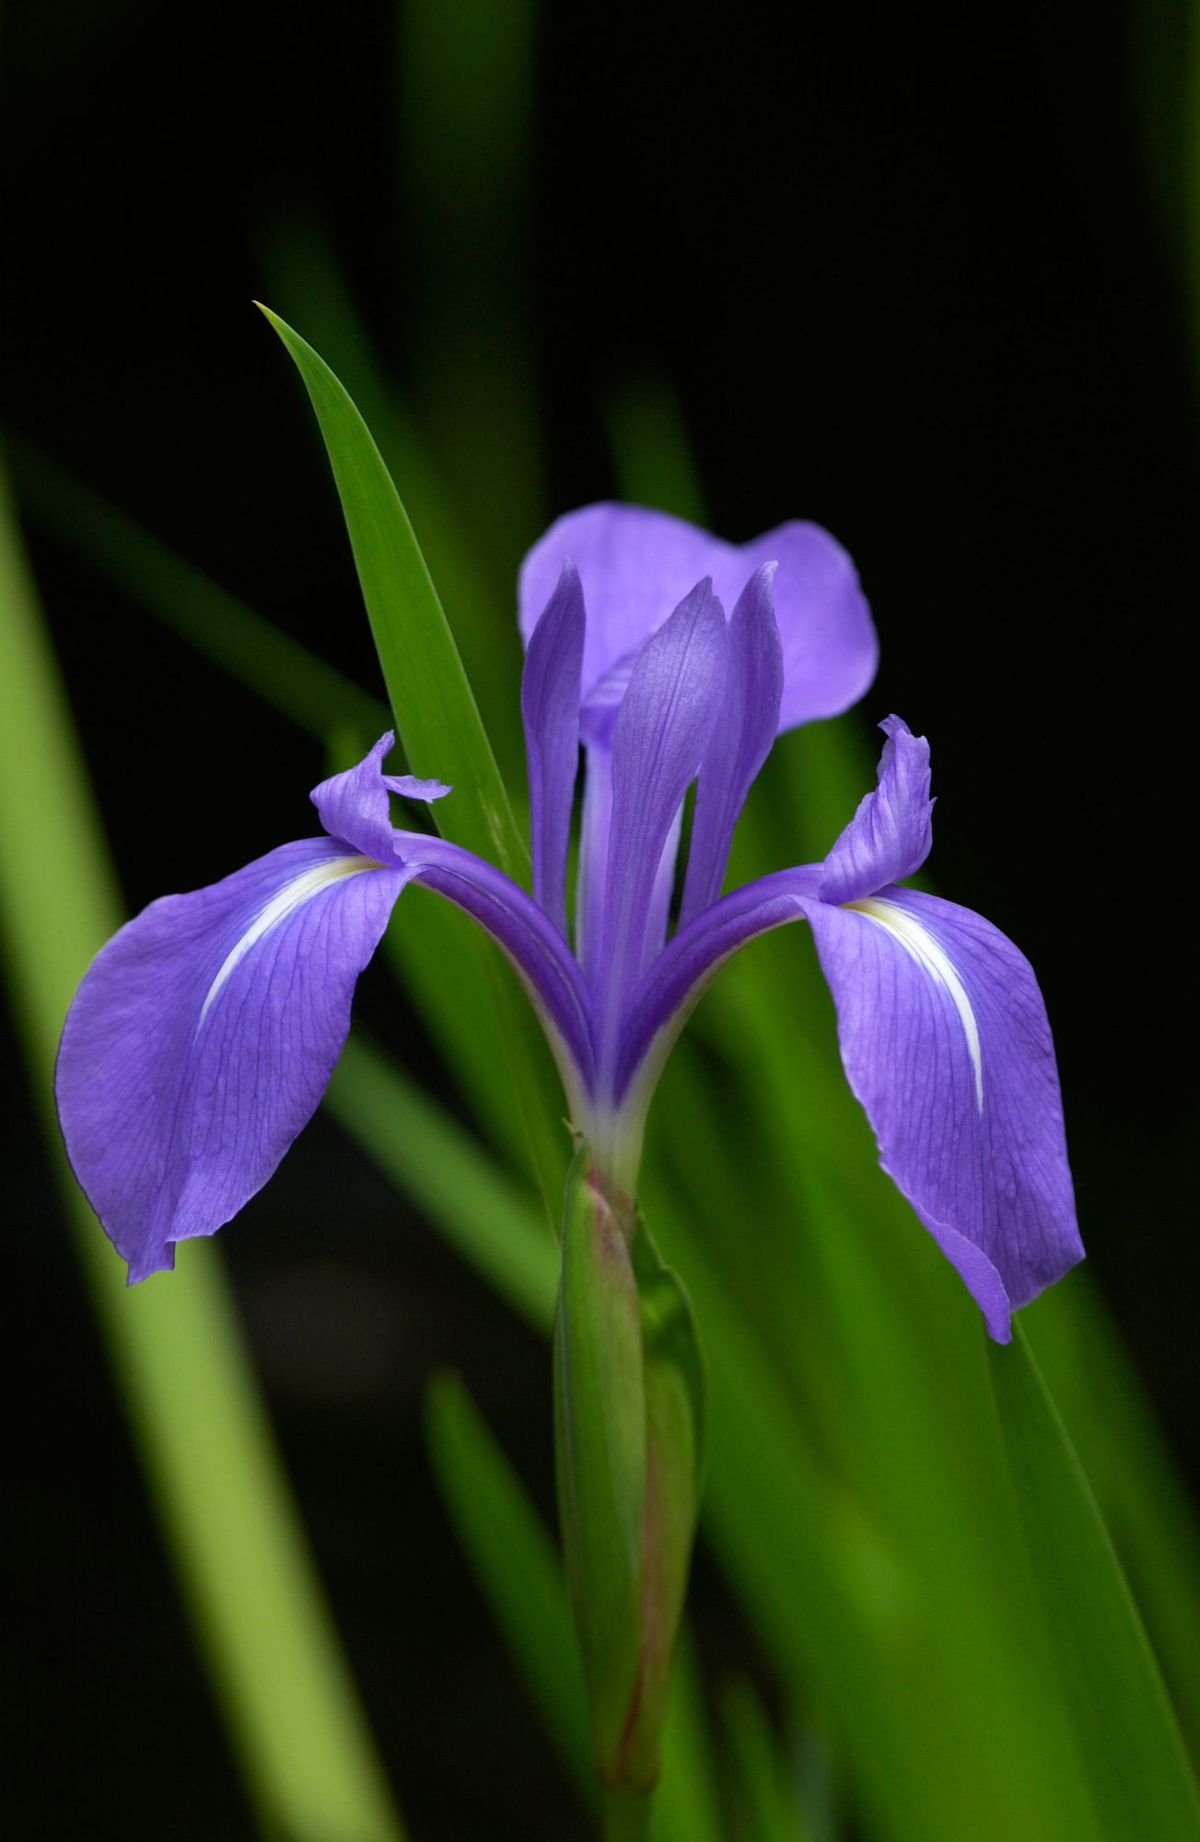 Iris February Birth Flower